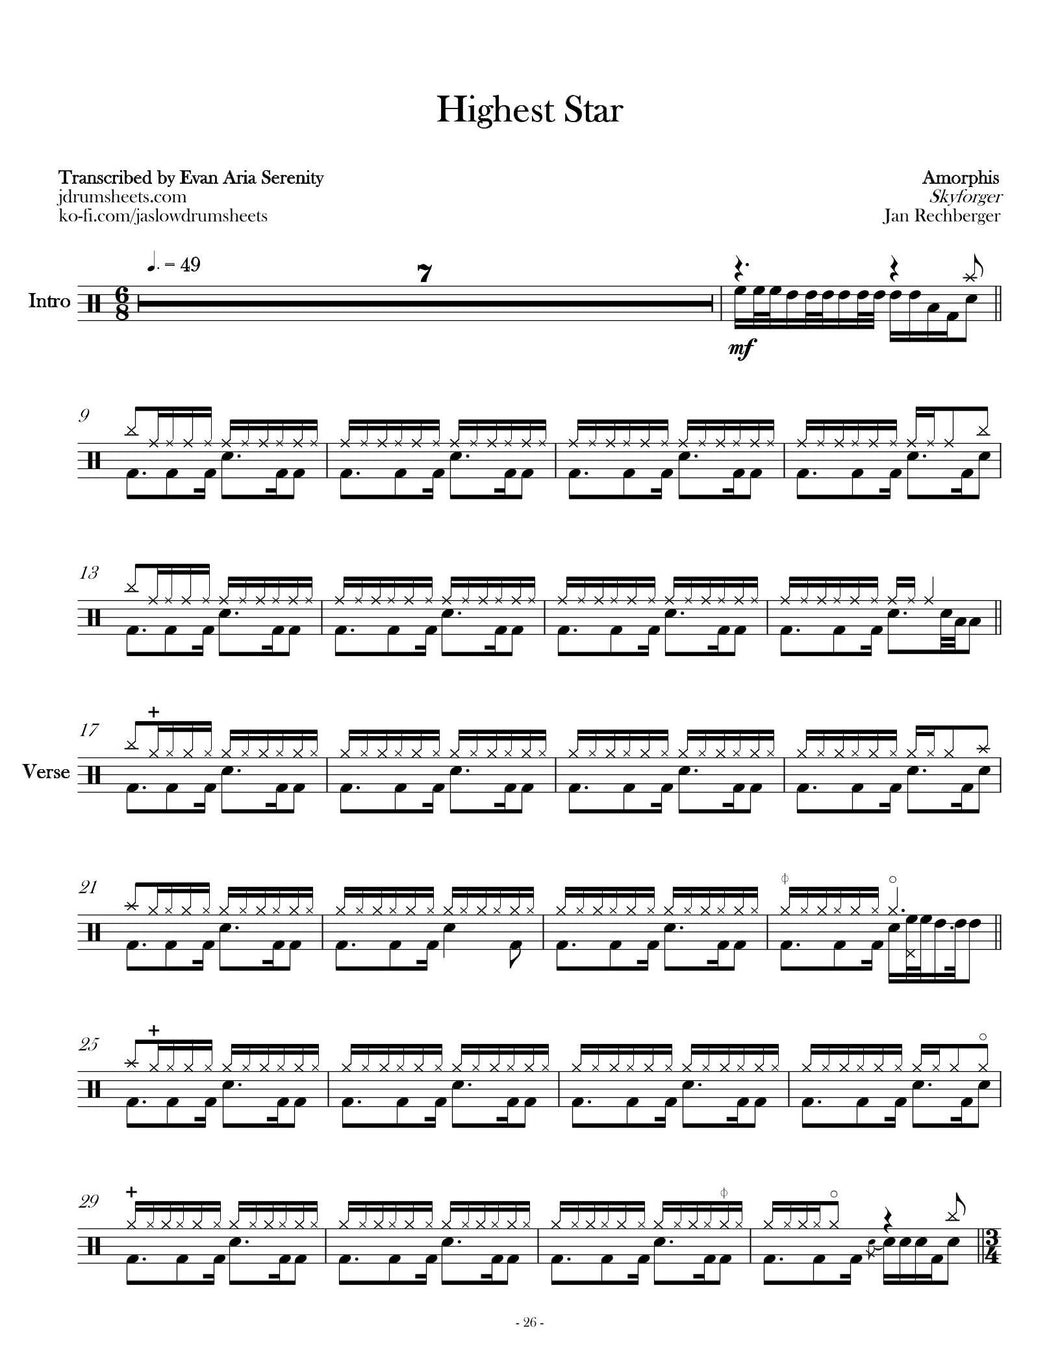 Highest Star - Amorphis - Full Drum Transcription / Drum Sheet Music - Jaslow Drum Sheets